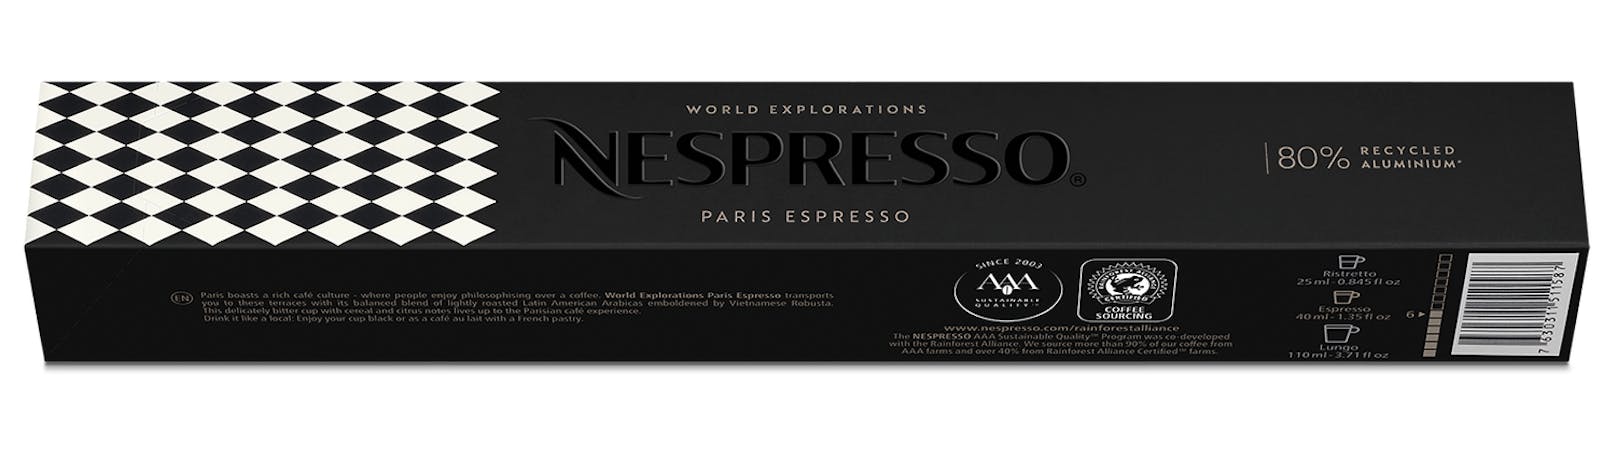 <strong>World Explorations Paris Espresso</strong> von <strong>Nespresso</strong>